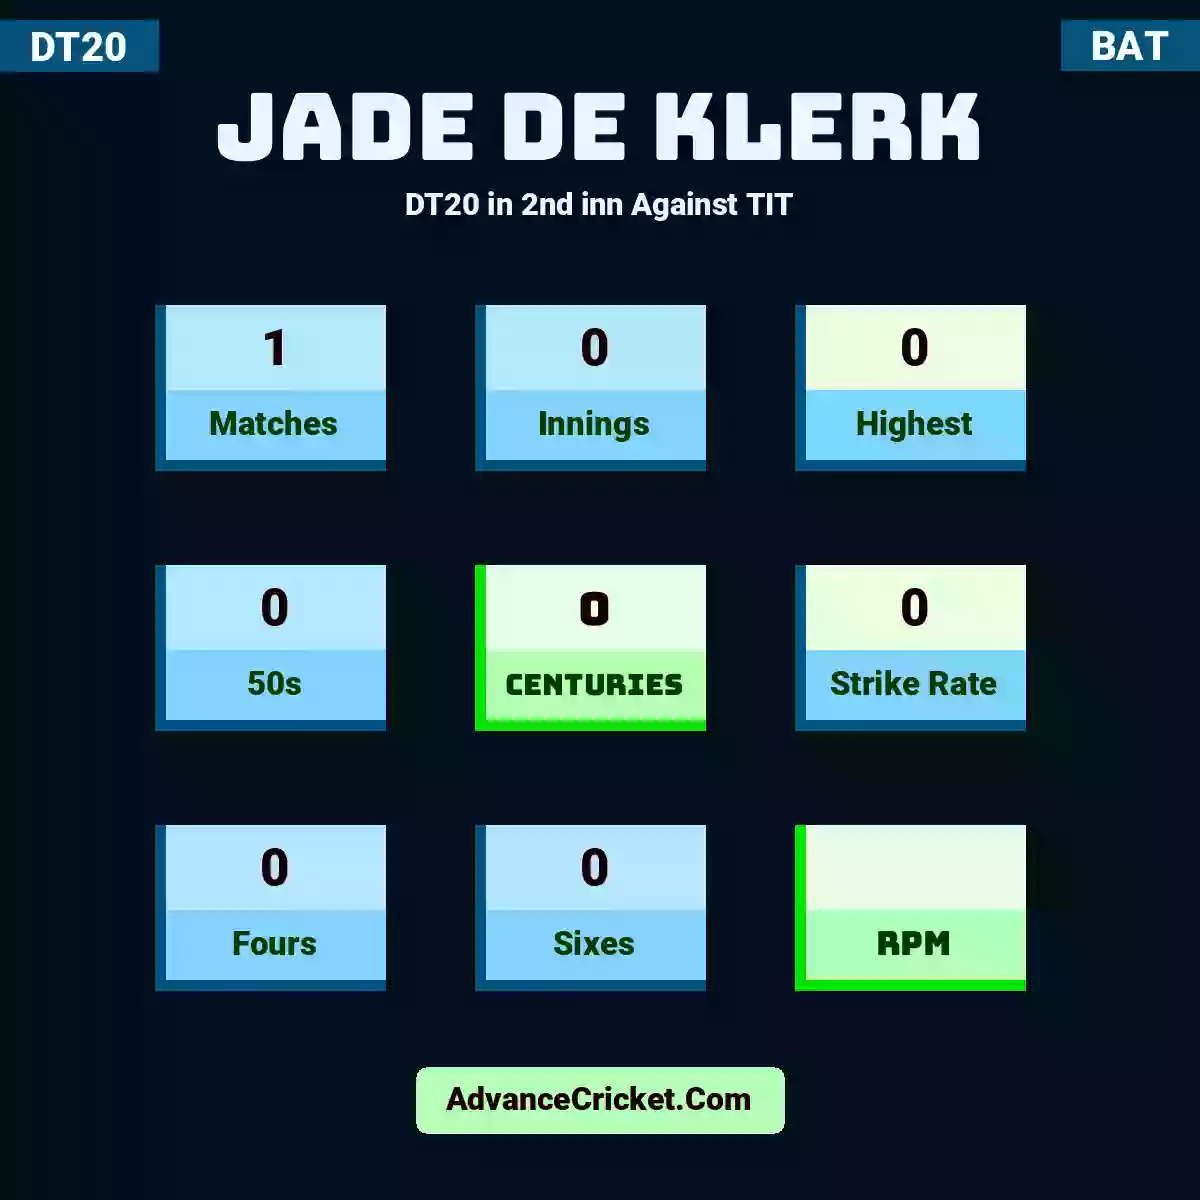 Jade de Klerk DT20  in 2nd inn Against TIT, Jade de Klerk played 1 matches, scored 0 runs as highest, 0 half-centuries, and 0 centuries, with a strike rate of 0. J.Klerk hit 0 fours and 0 sixes.